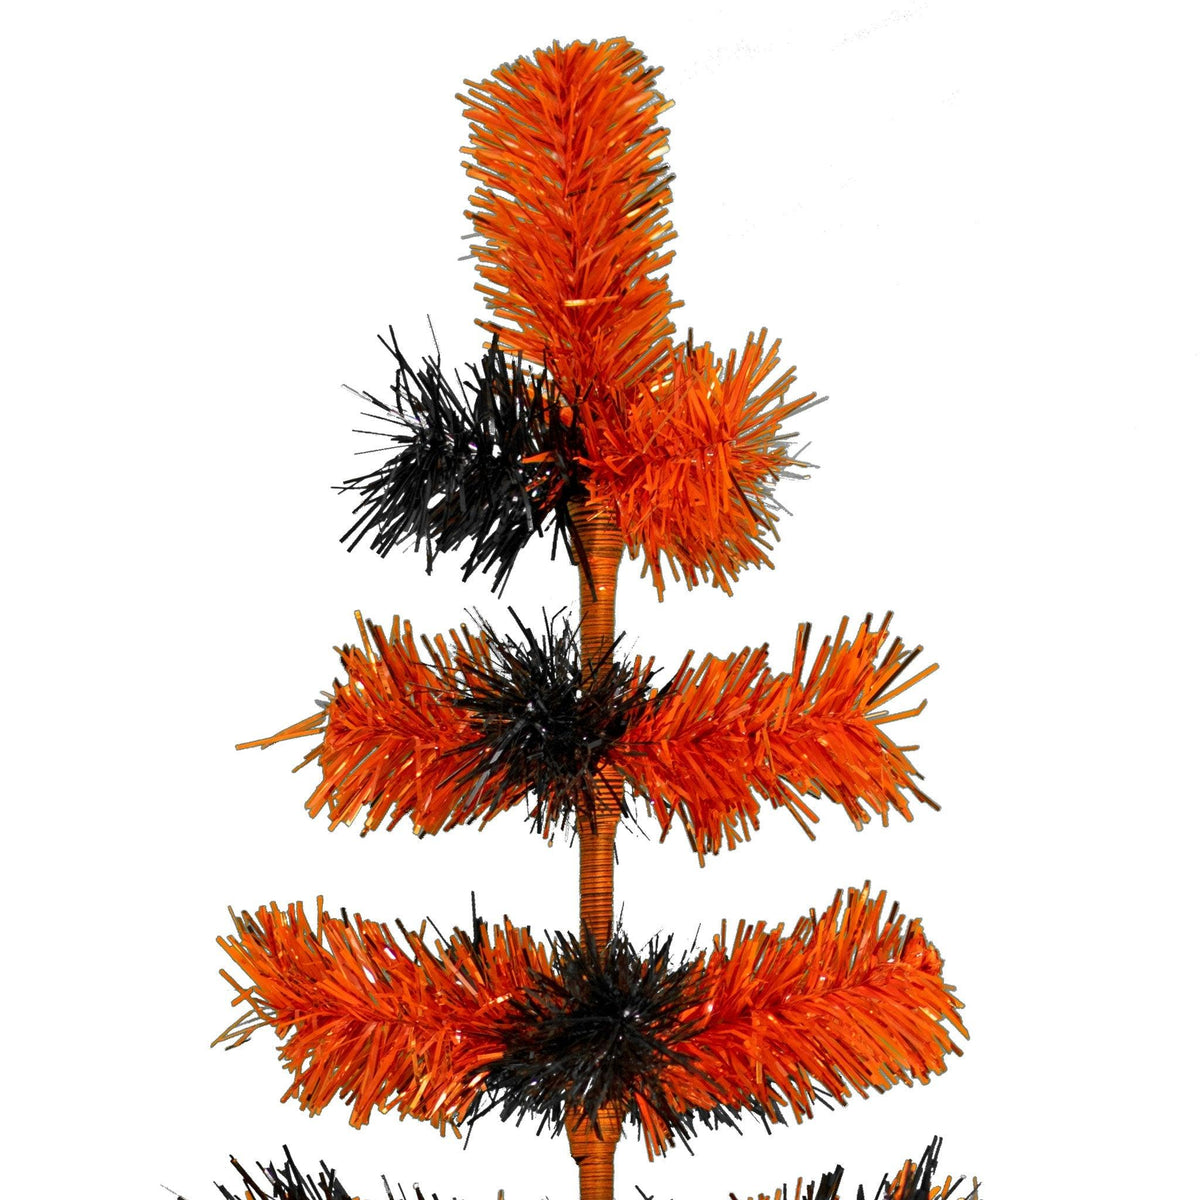 Introducing Lee Display's brand new Orange and Black Halloween Themed Christmas Trees on sale at leedisplay.com